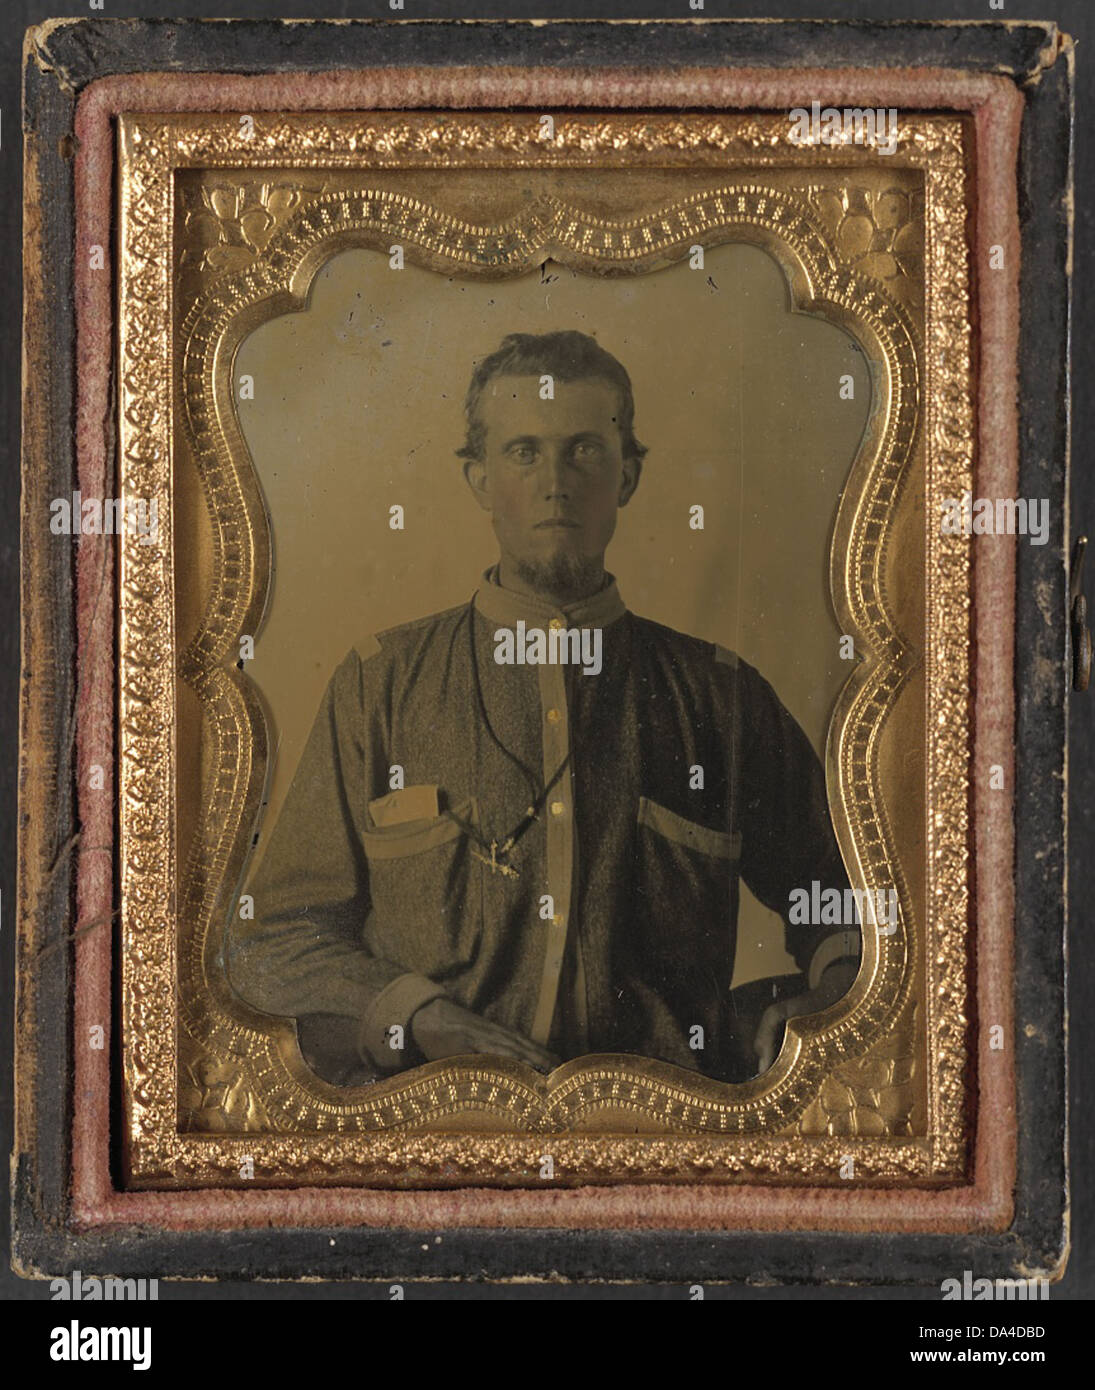 [Private Reuben Goodson of Co. G, 52nd North Carolina Infantry Regiment in uniform] (LOC) Stock Photo